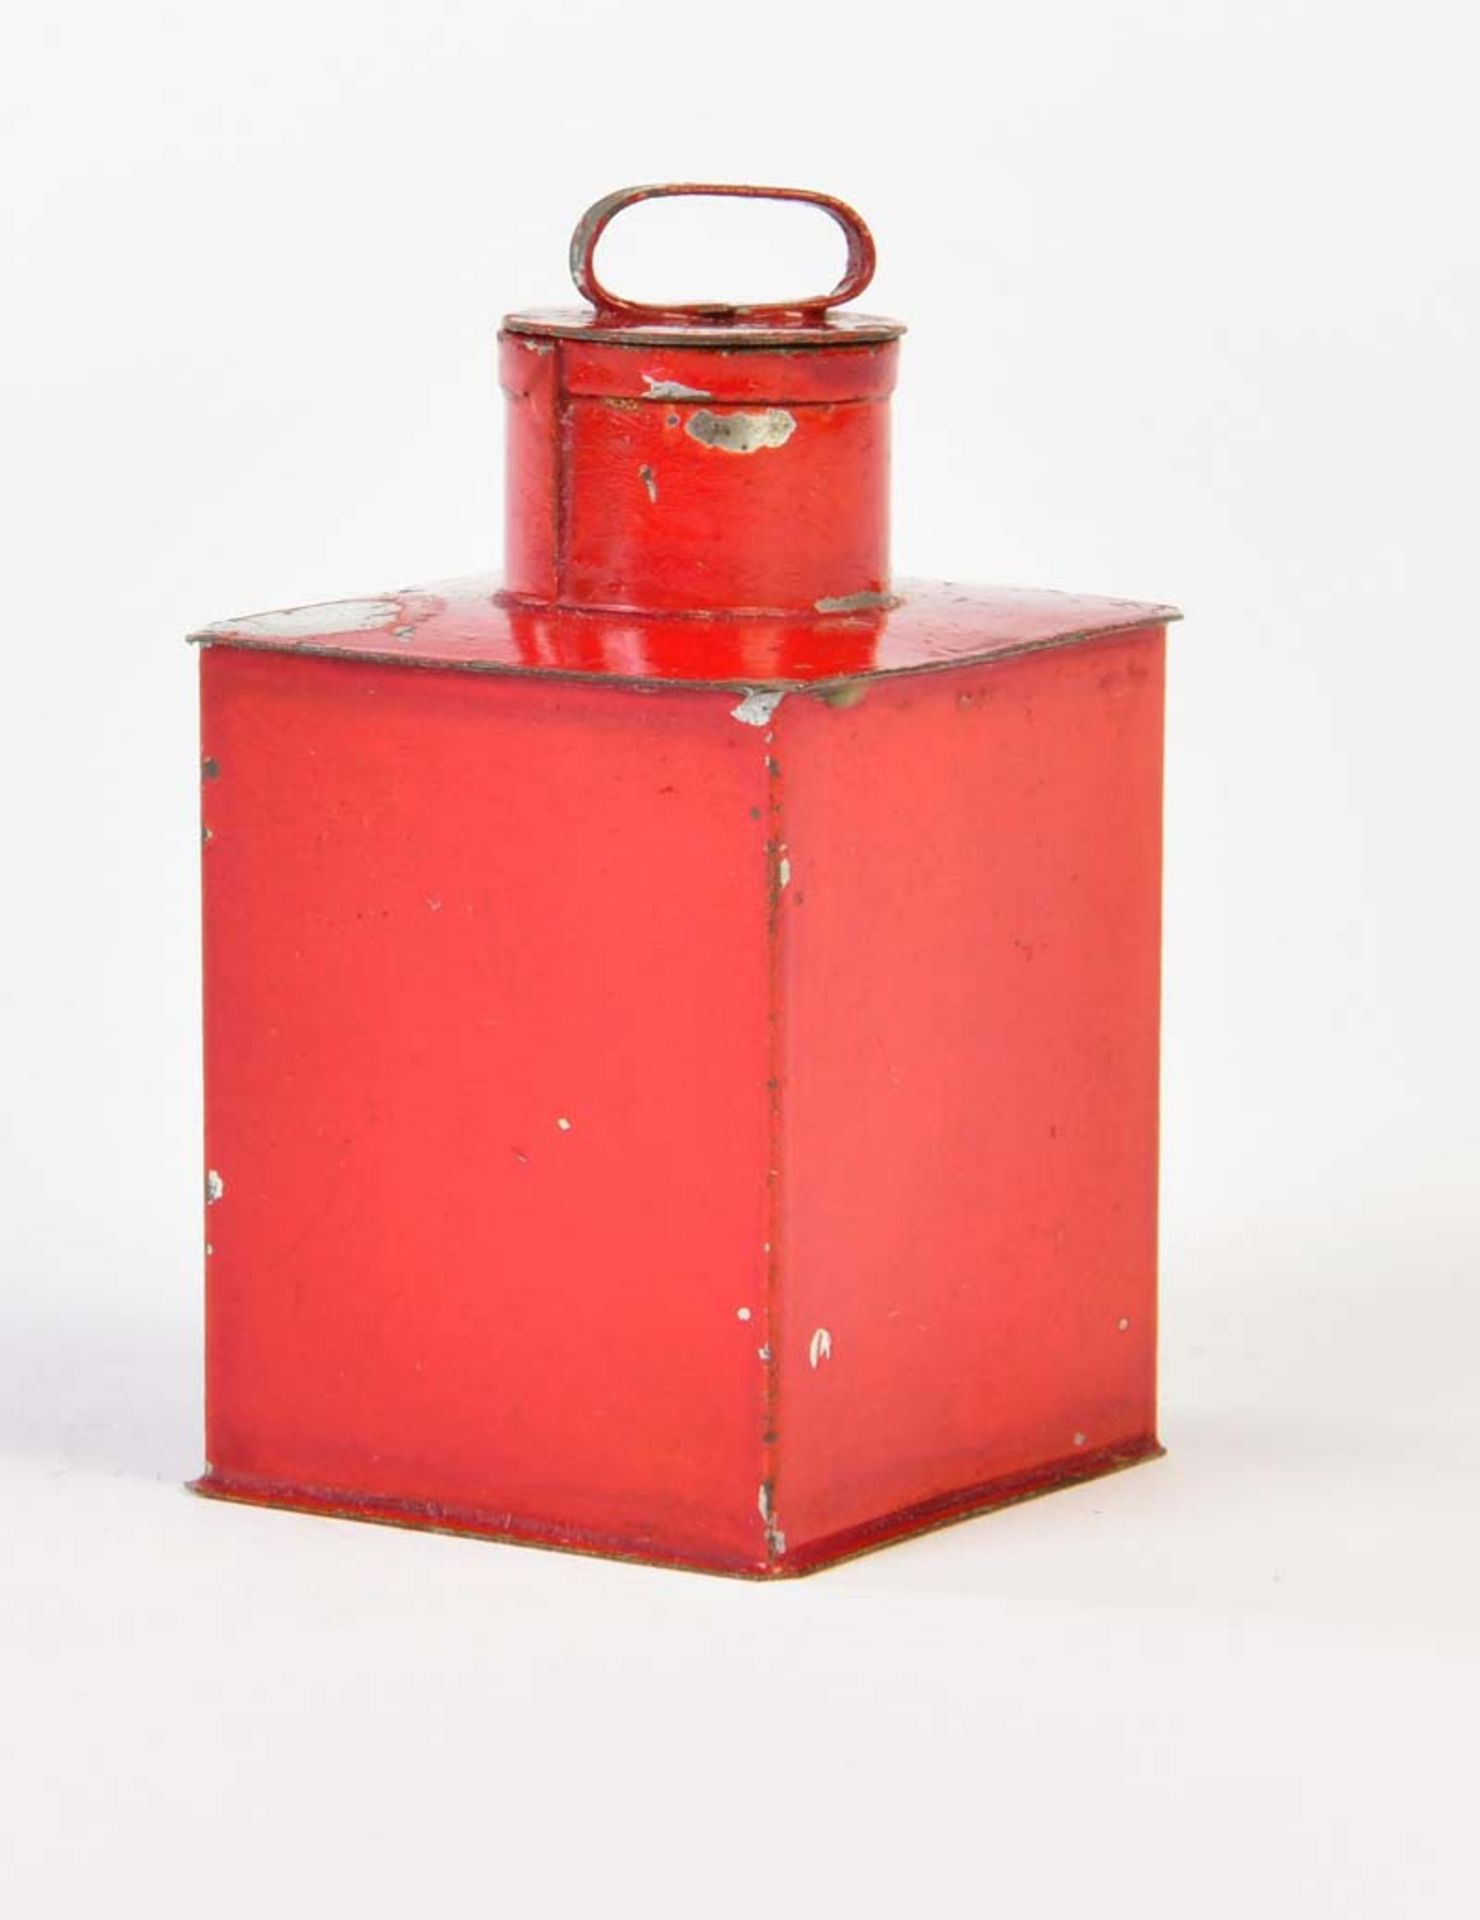 Märklin, tea tin can, Germany pw, min. paint d., C 2 - Image 2 of 3